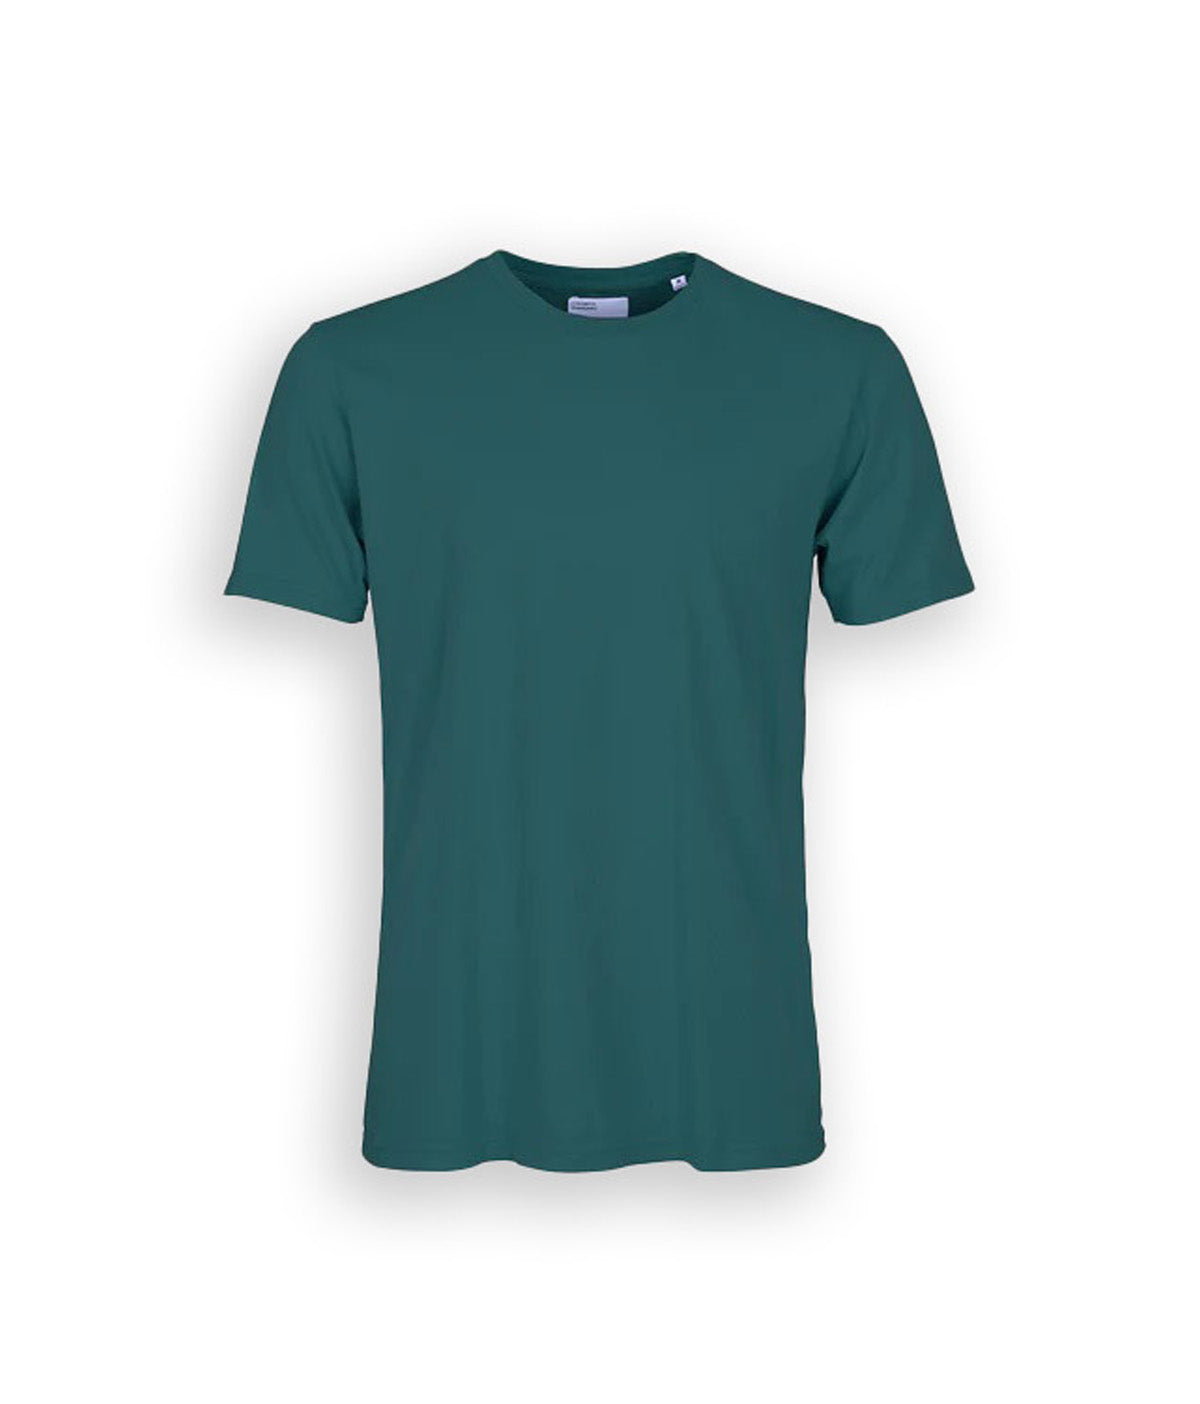 T-Shirt Colorful Standard Cotone Organico Verde Acqua Unisex